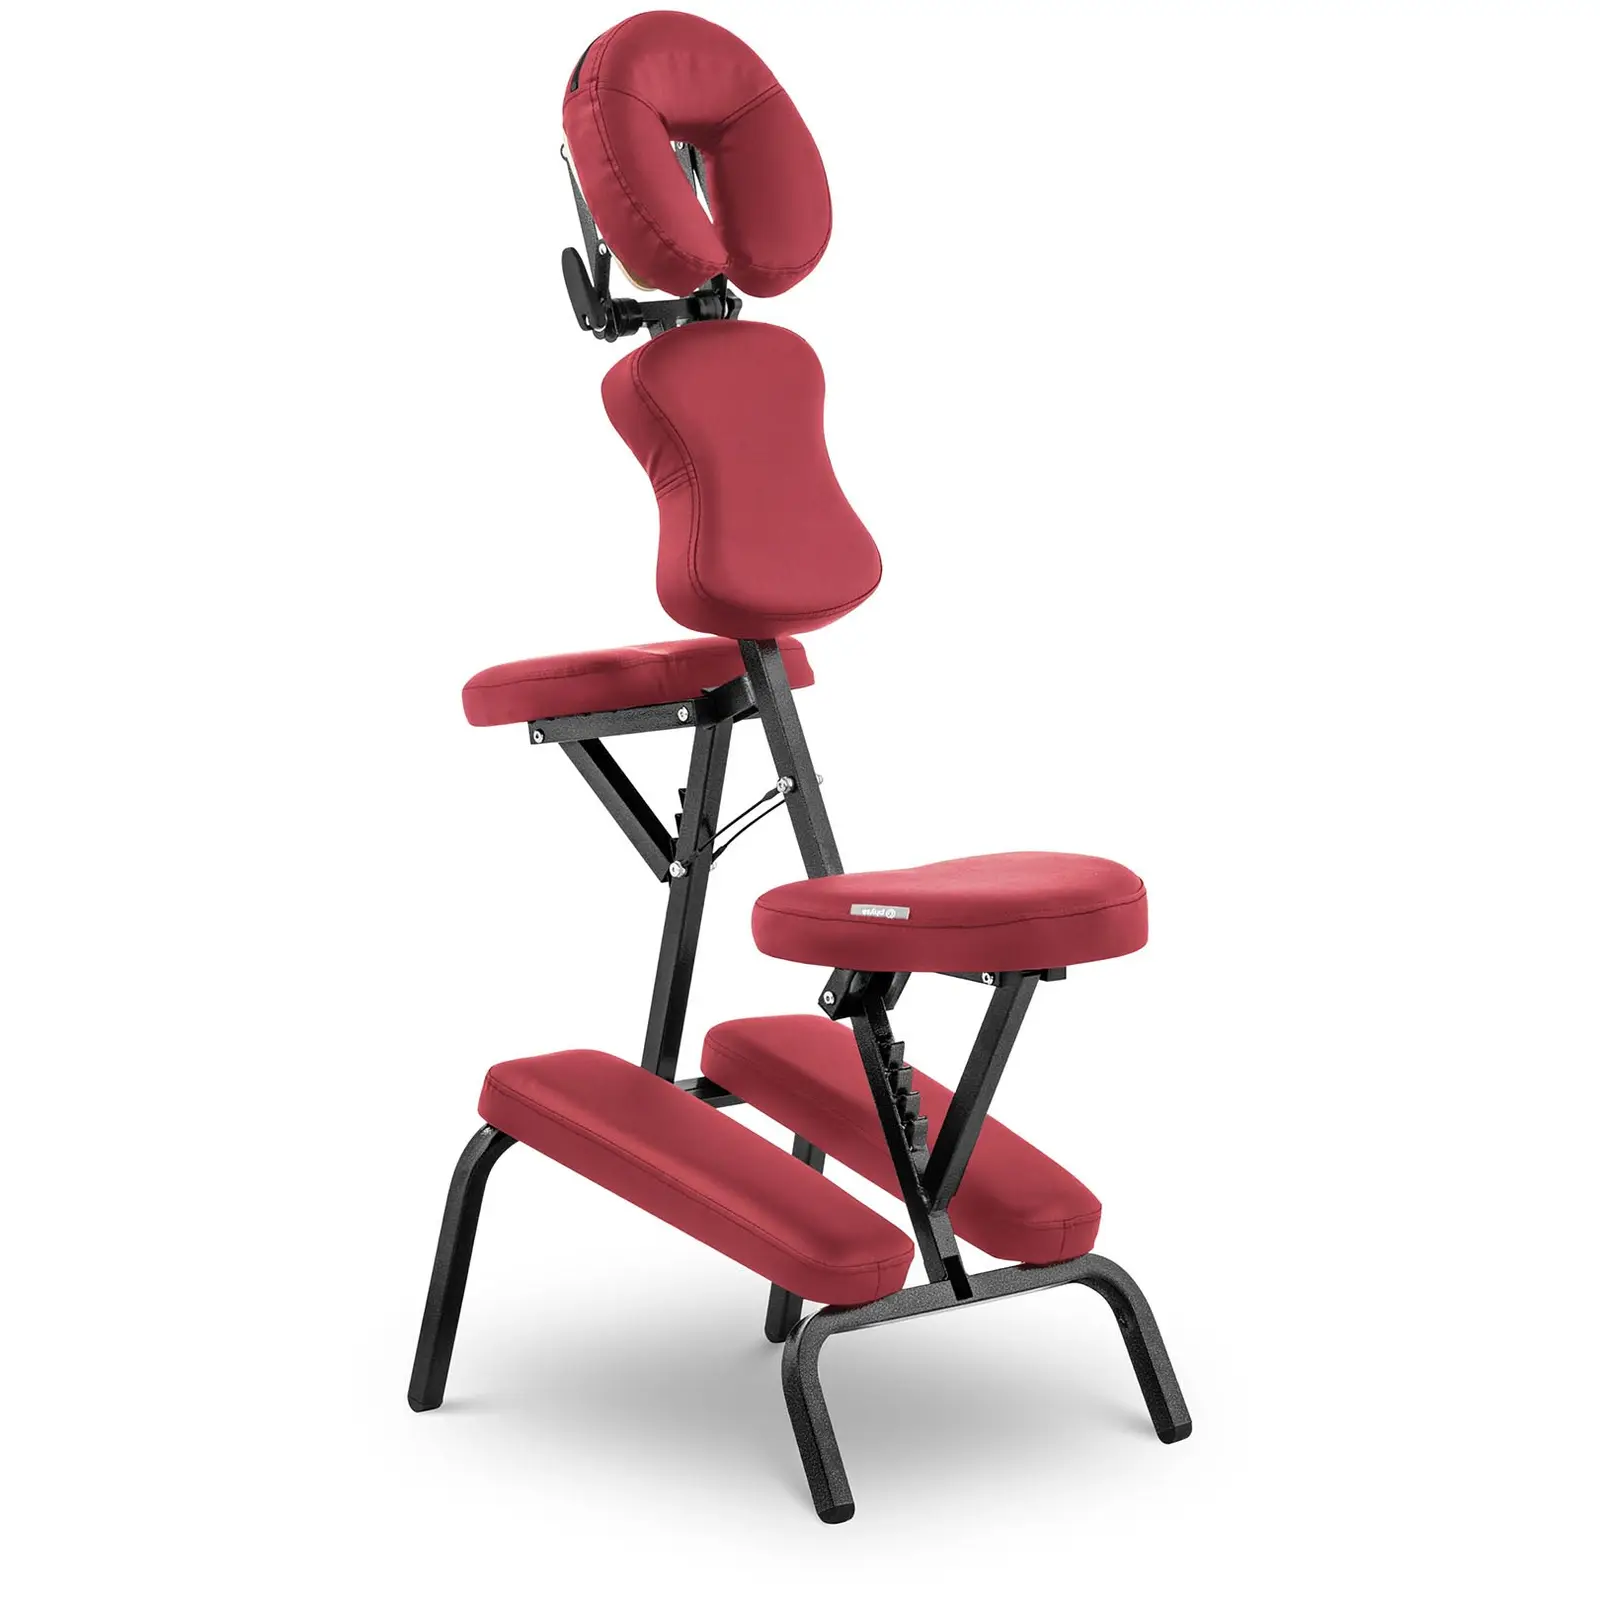 Silla de masaje portátil - 130 kg - Rojo